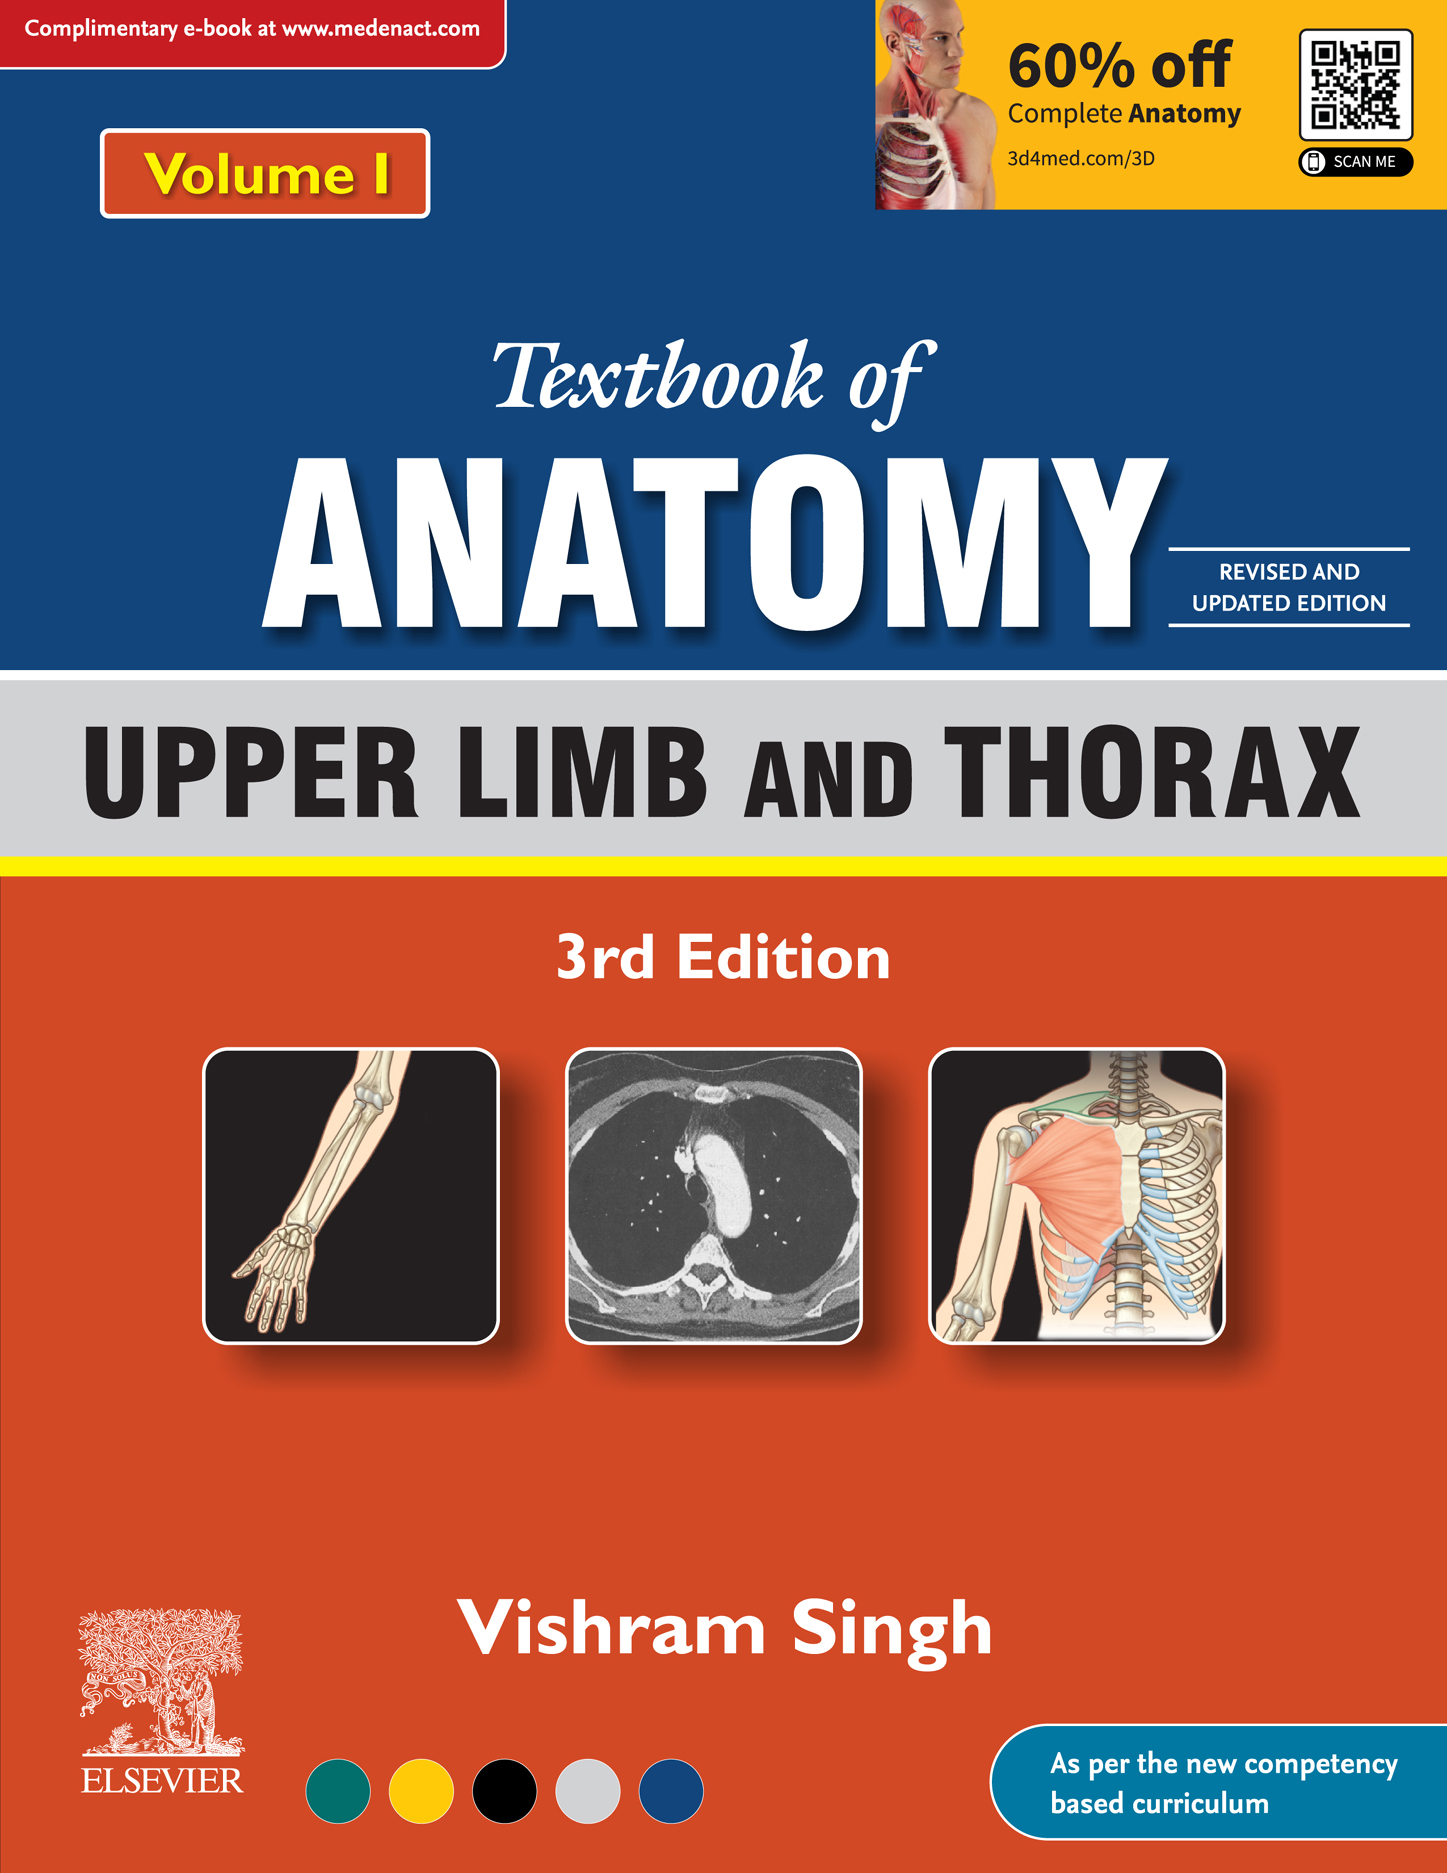 Upper Limb - Nerve Anatomy - Neuroanatomy Flashcards